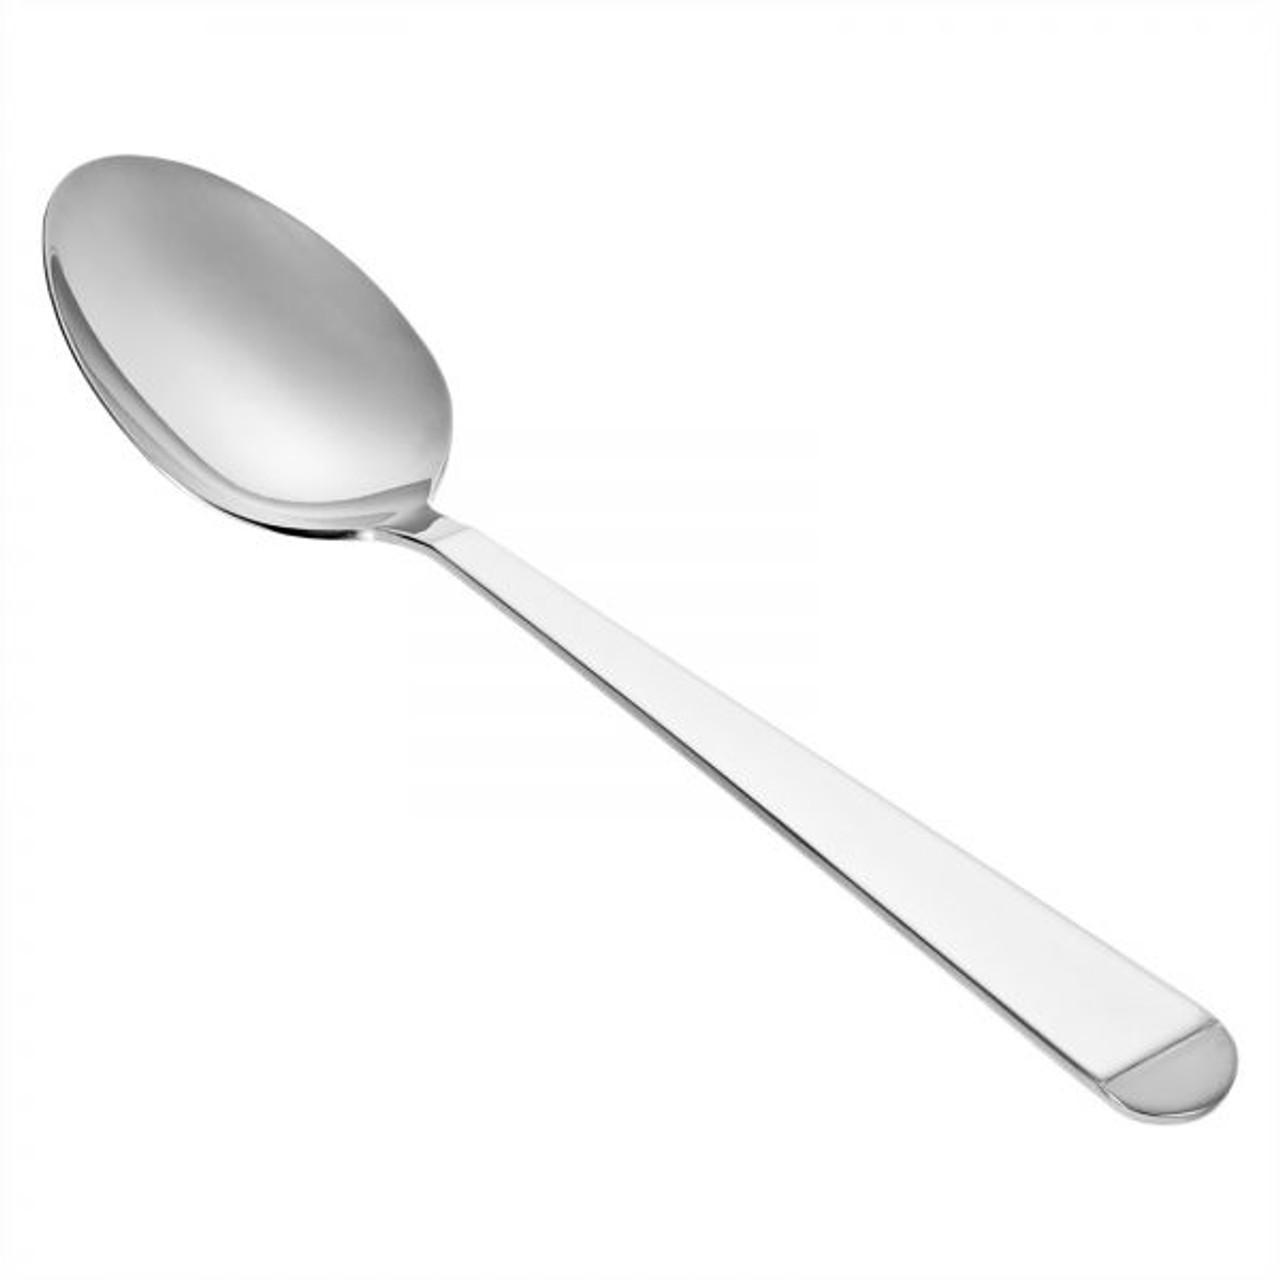 Serving Spoon - S/Steel